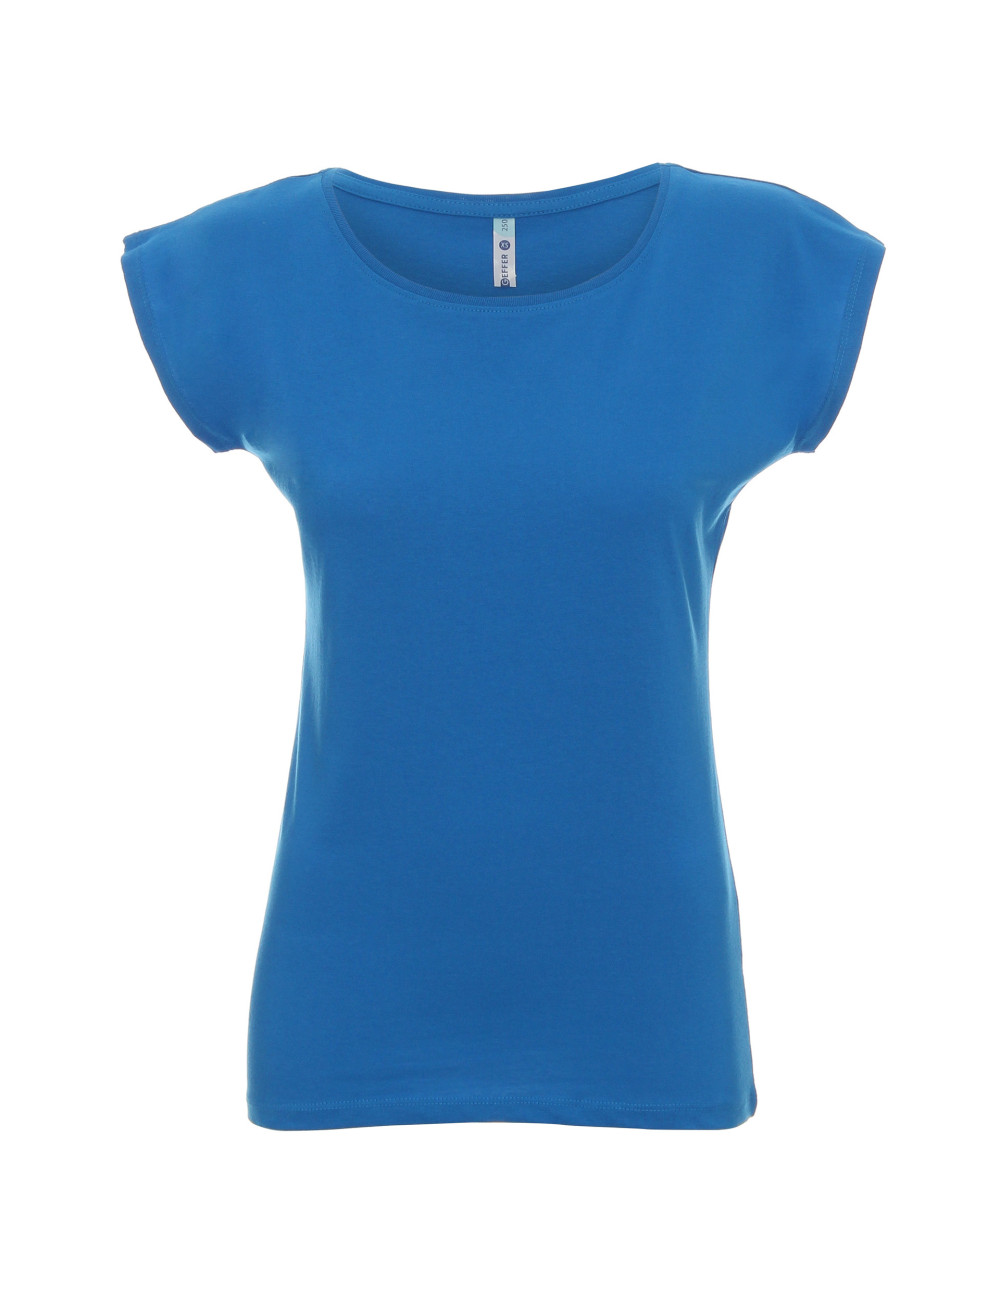 Koszulka damska 250 niebieski Geffer